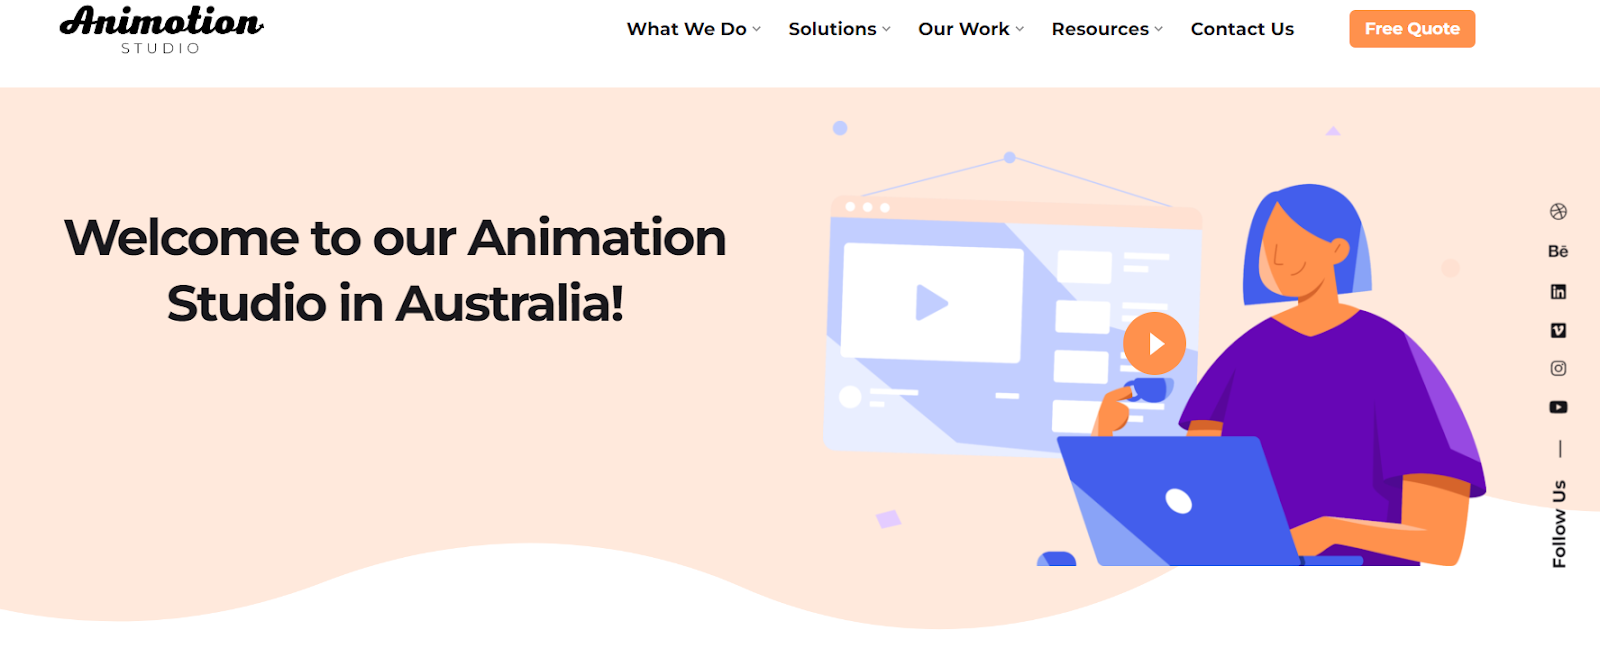 animotion whiteboard animation company